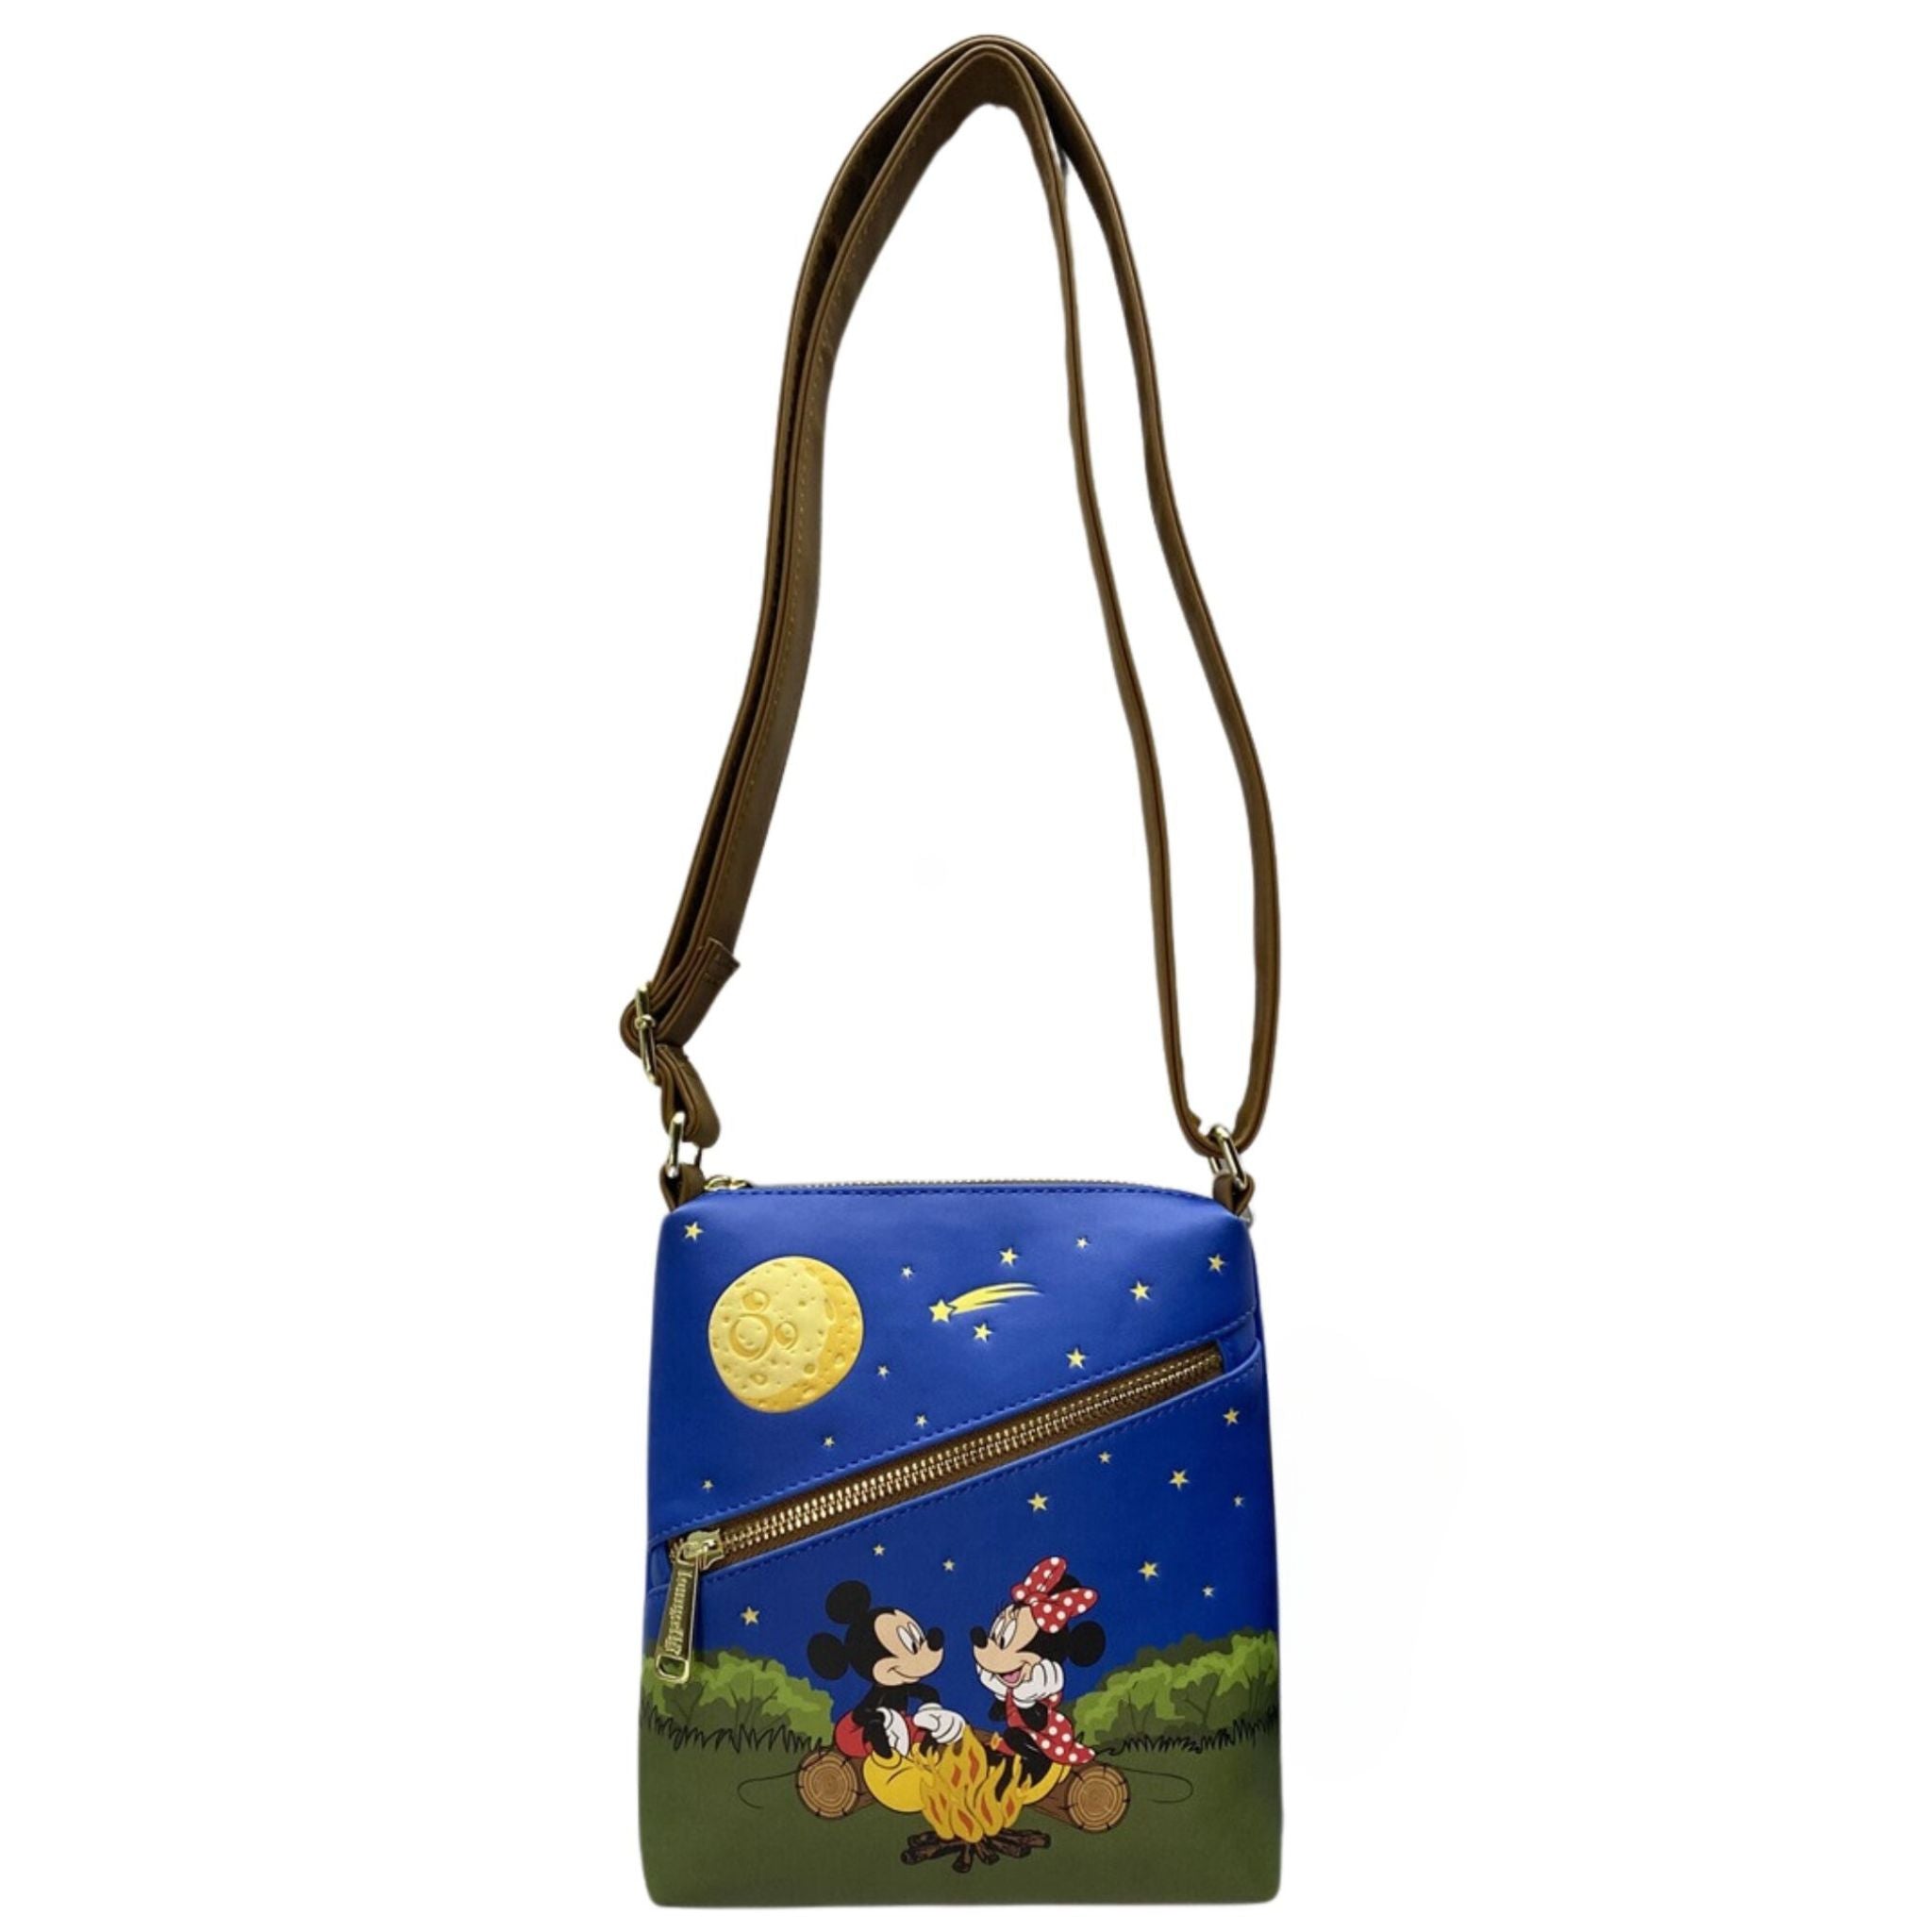 Amazon.com: Mickey Mouse Tote Bag